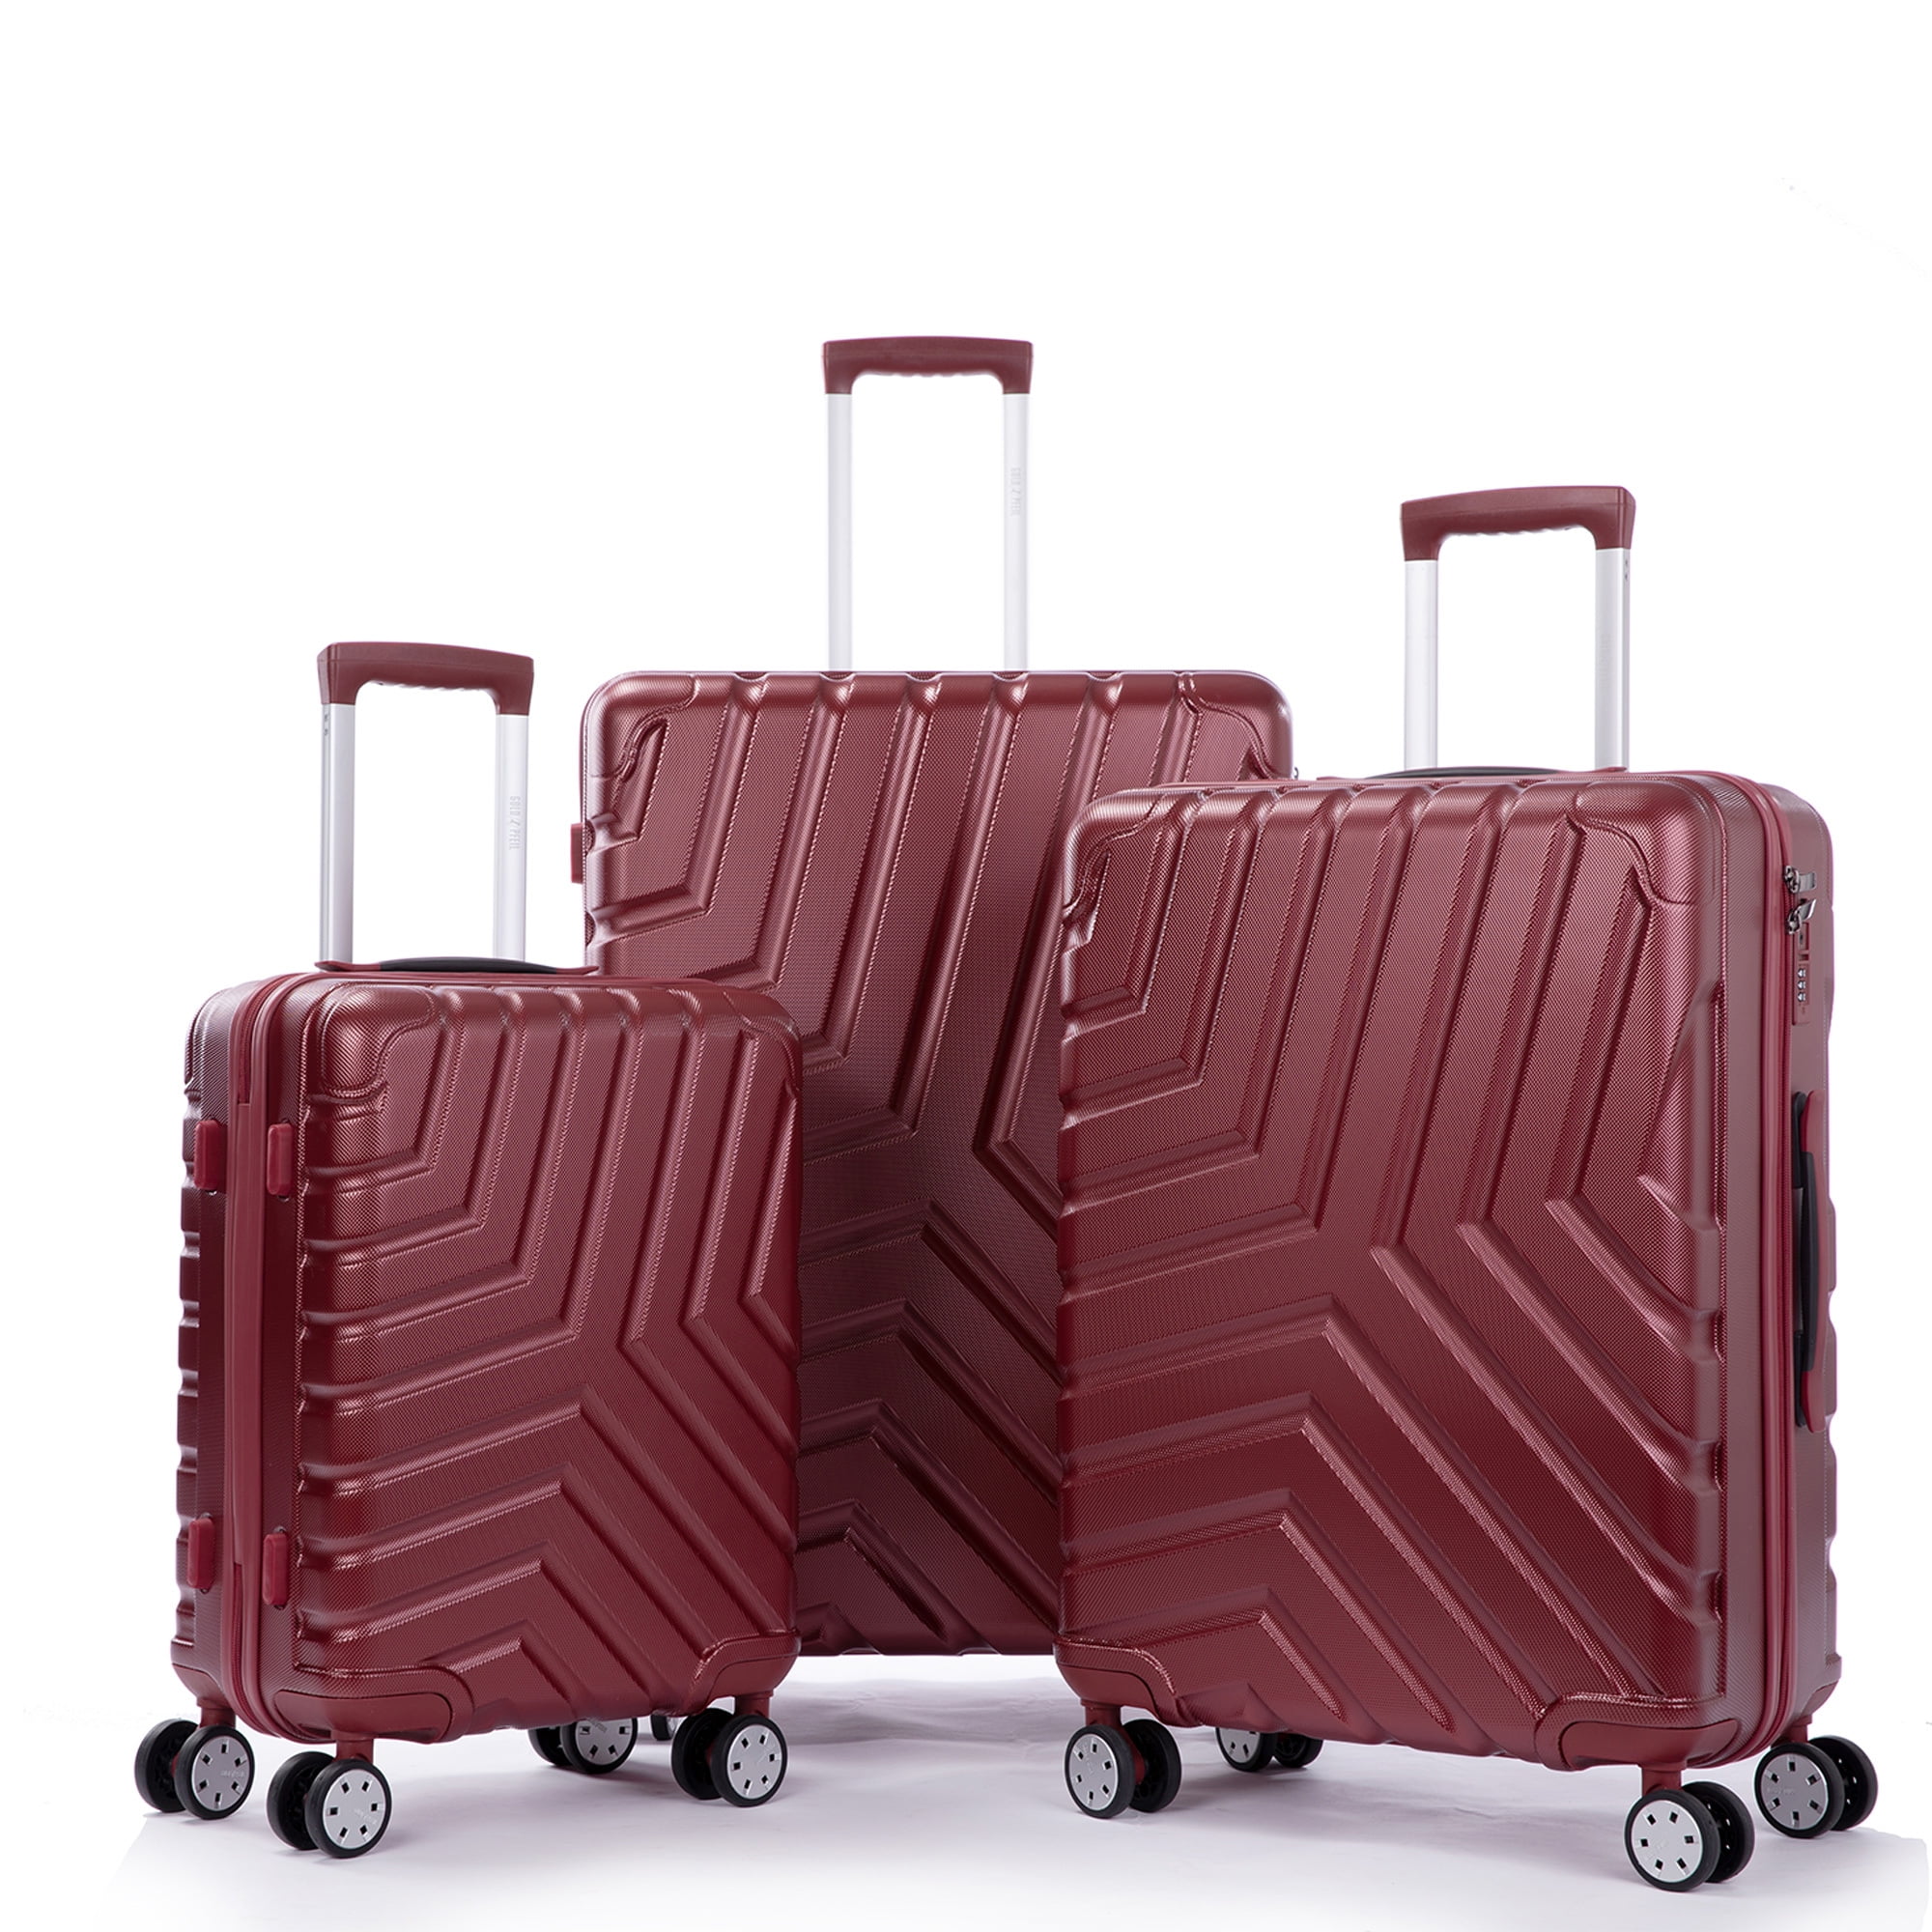 Aukfa 100% PC Suitcase Hardside Luggage Set,3 Pieces with Double ...